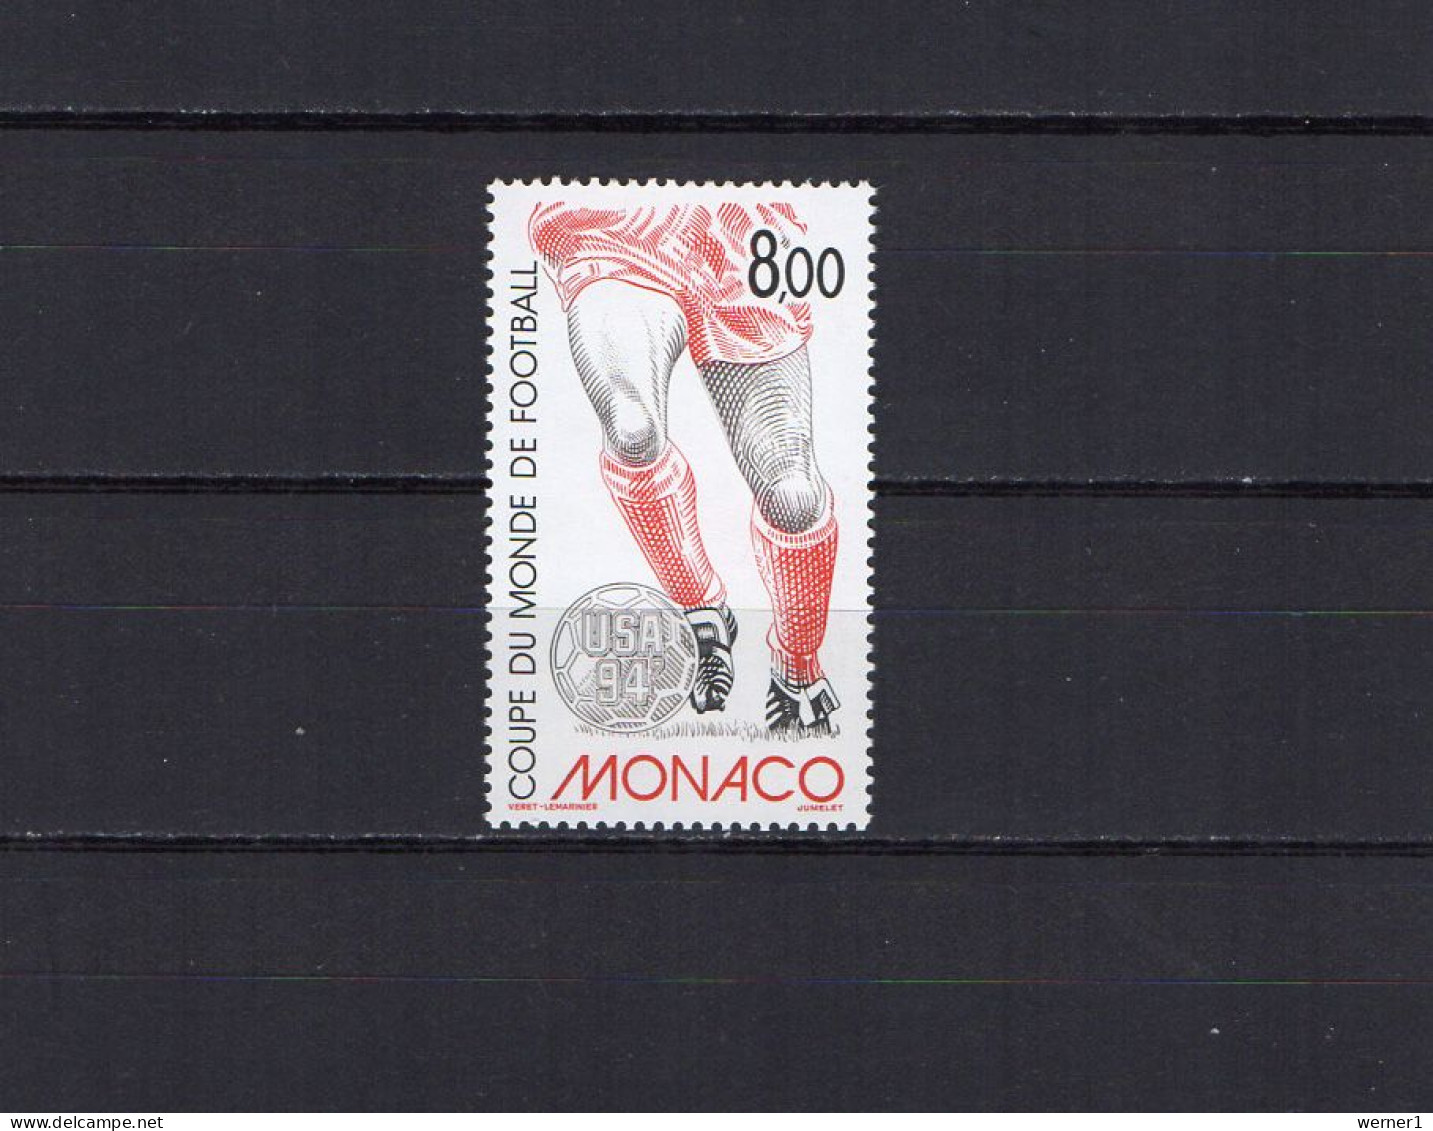 Monaco 1994 Football Soccer World Cup Stamp MNH - 1994 – Vereinigte Staaten